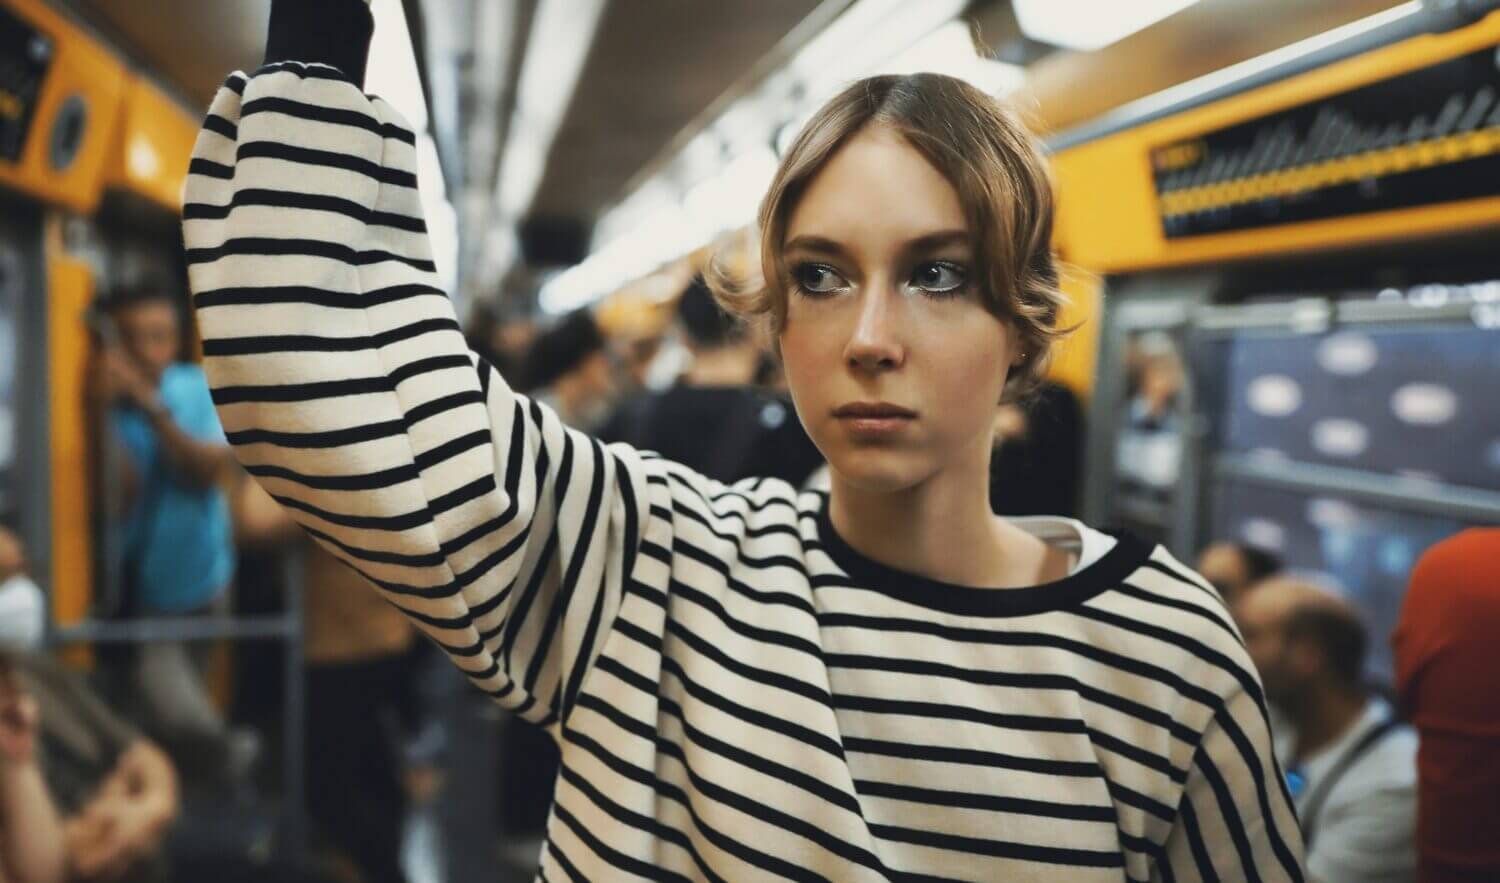 Teenage girl rides in a subway train.